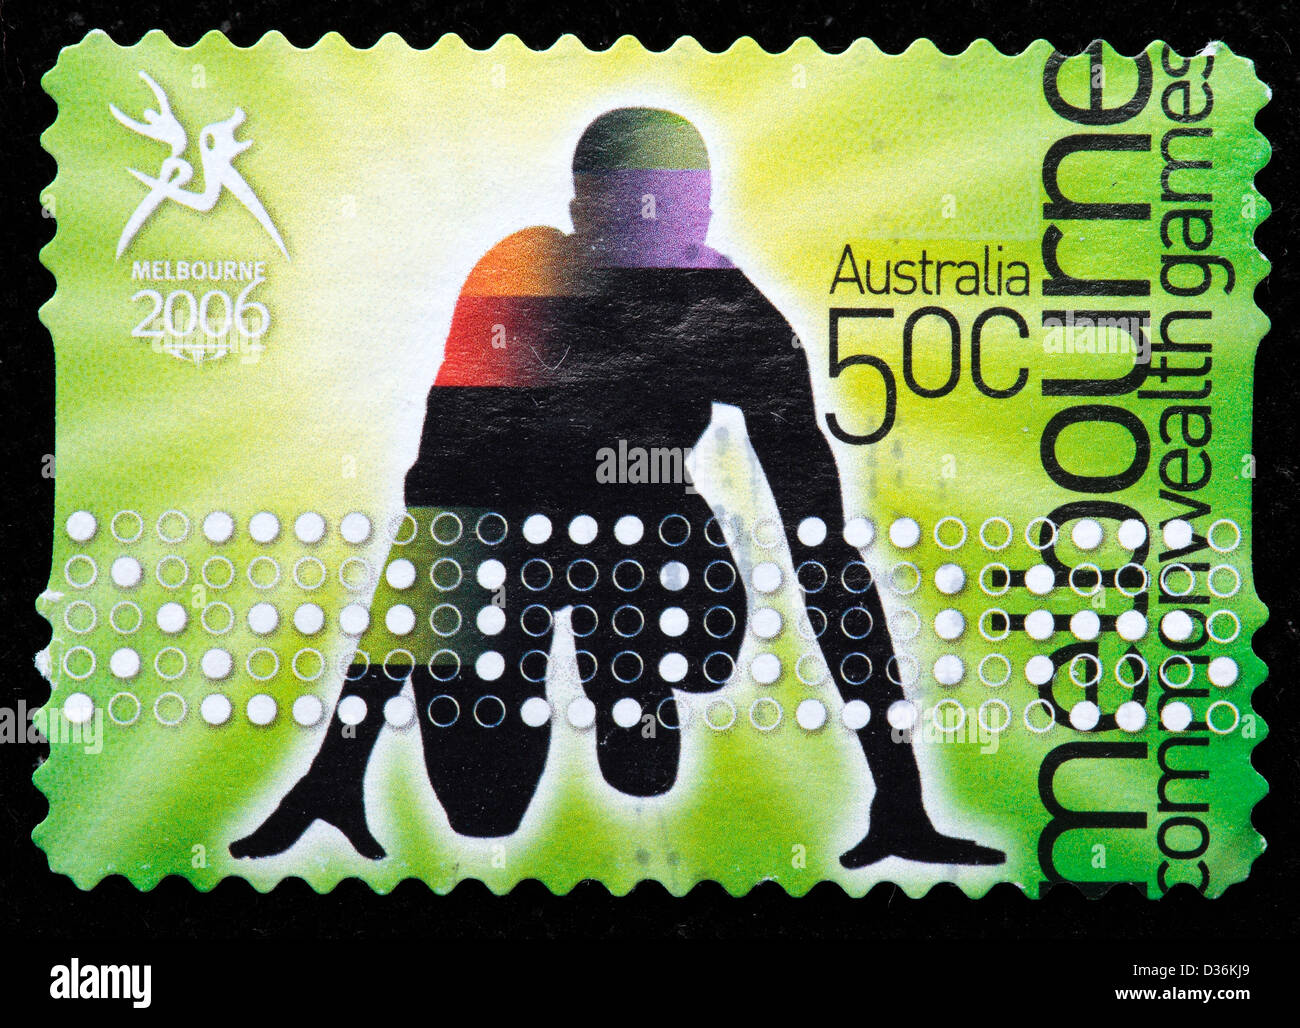 Melbourne commonwealth games, postage stamp, Australia, 2006 Stock Photo